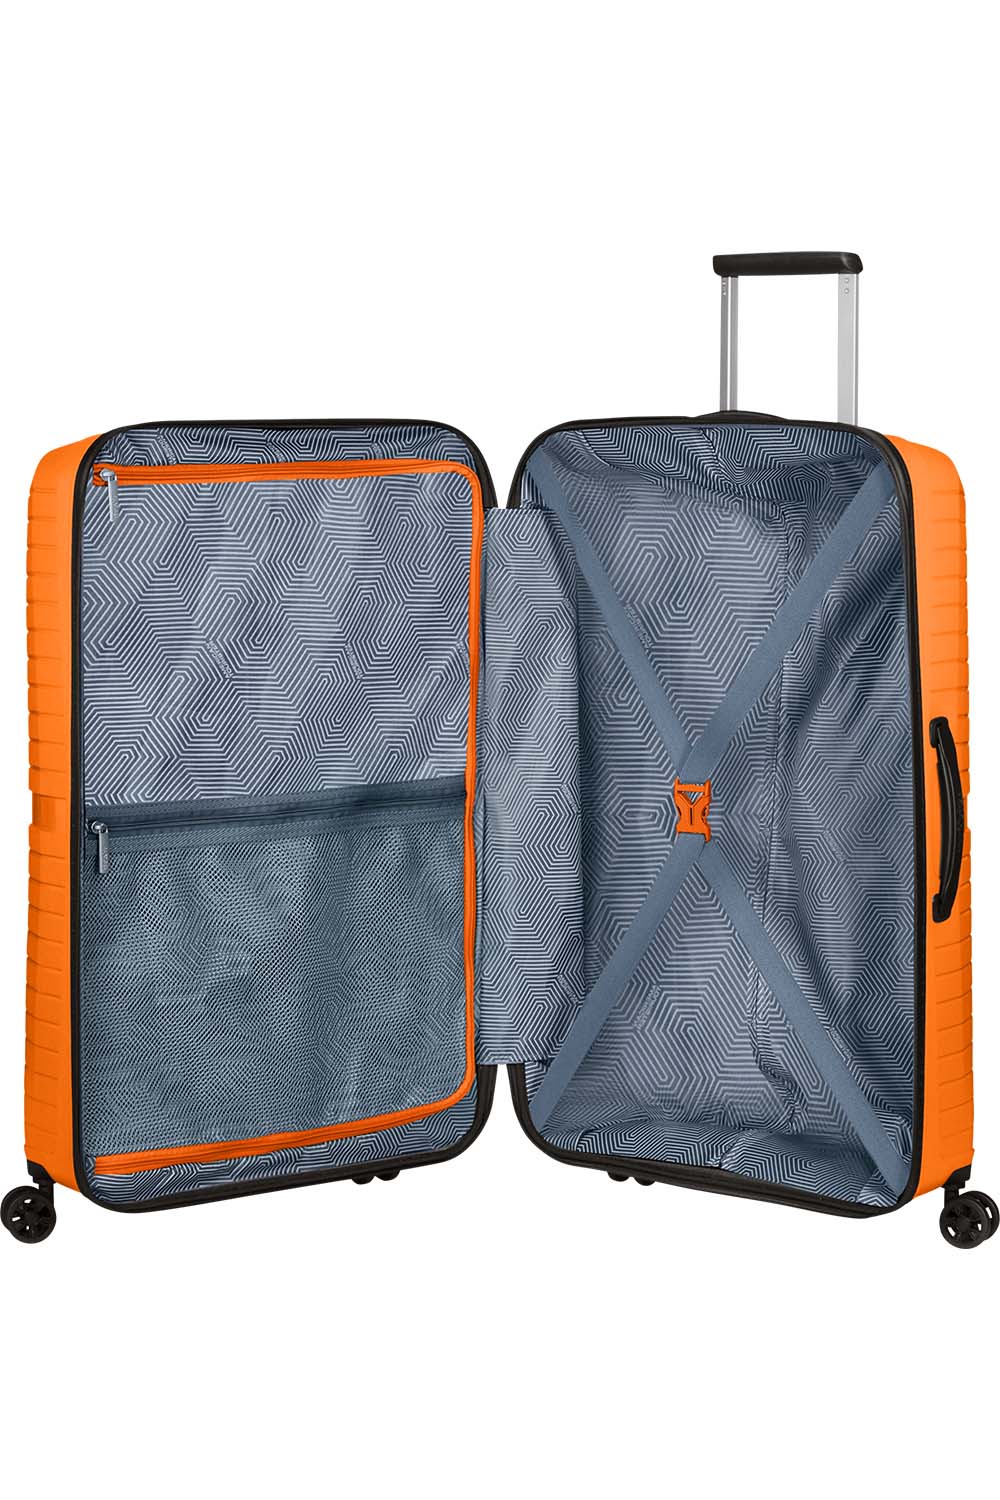 American Tourister Suitcase Airconic מזוודה גדולה קלה קשיחה 28"